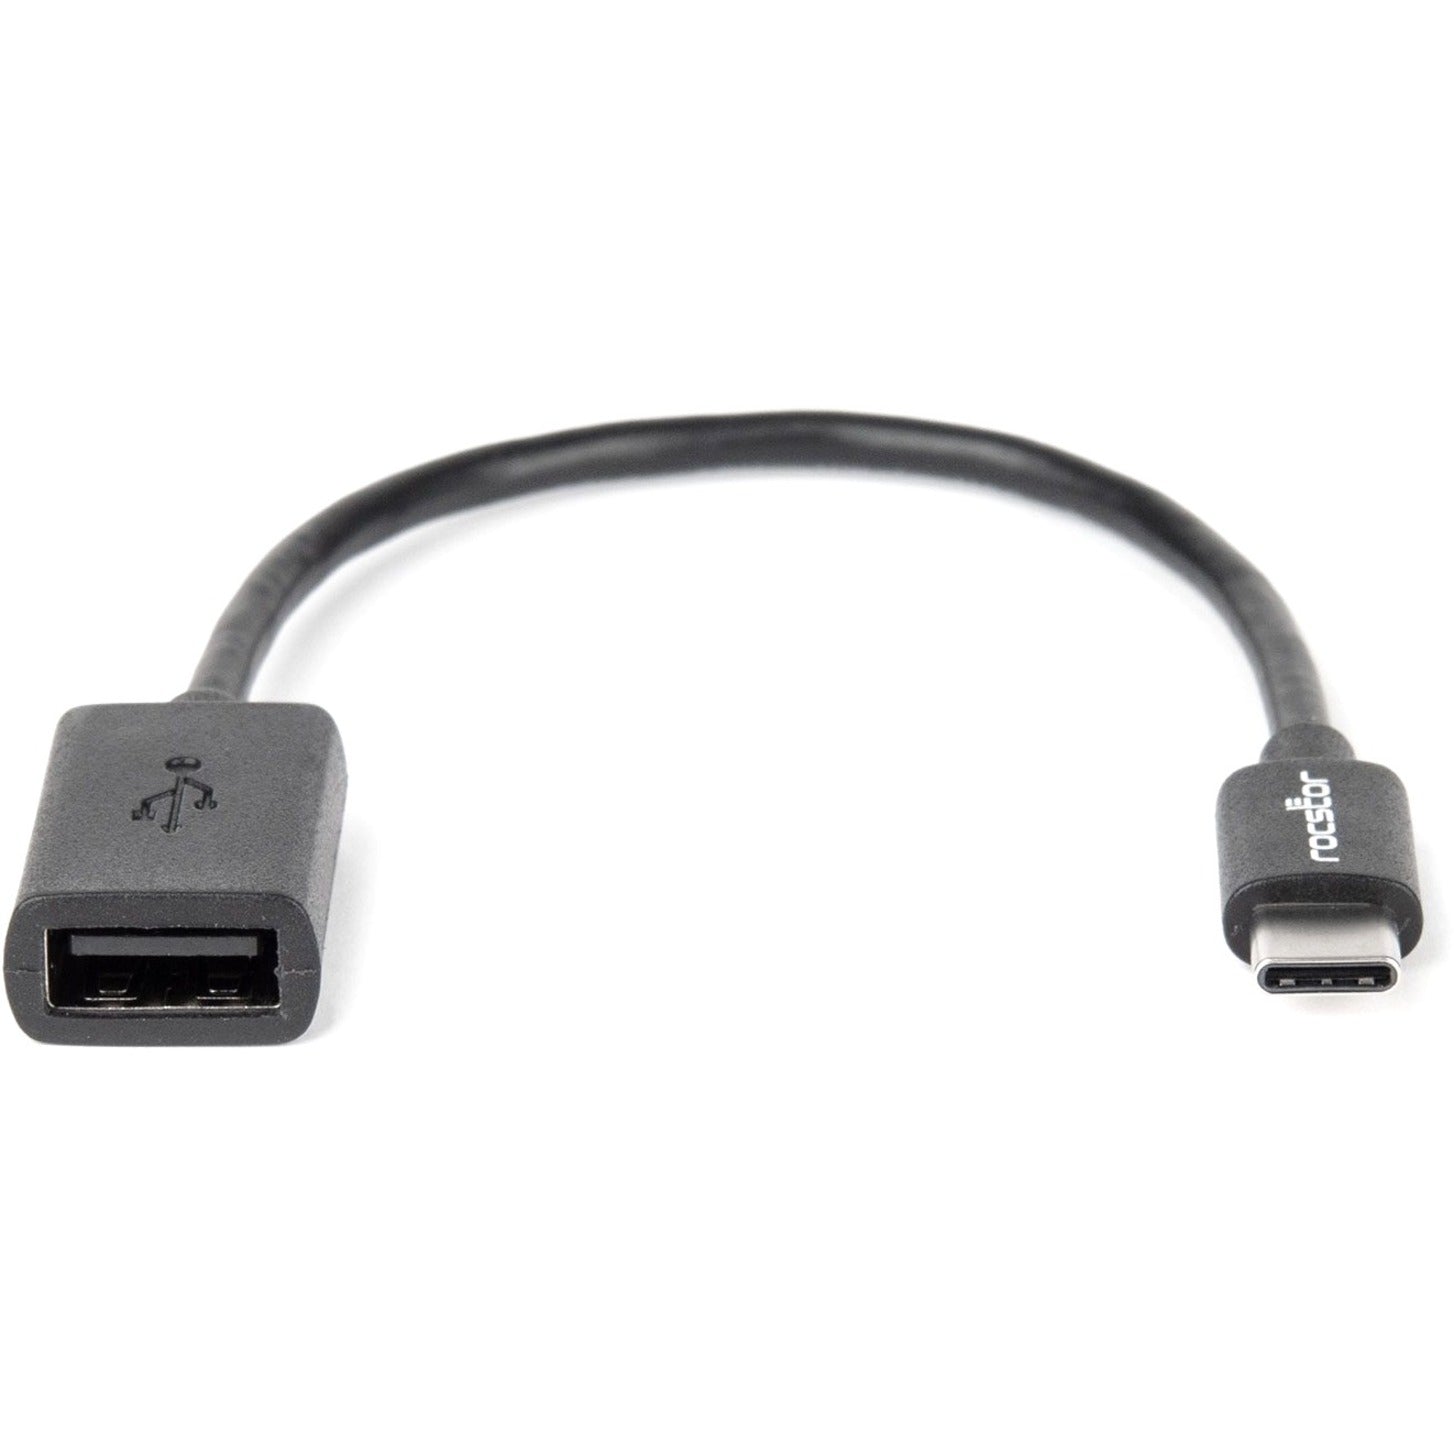 Rocstor Y10C142-B1 Premium USB Data Transfer Adapter, USB-C Gen1 to USB 2.0 Type A M/F